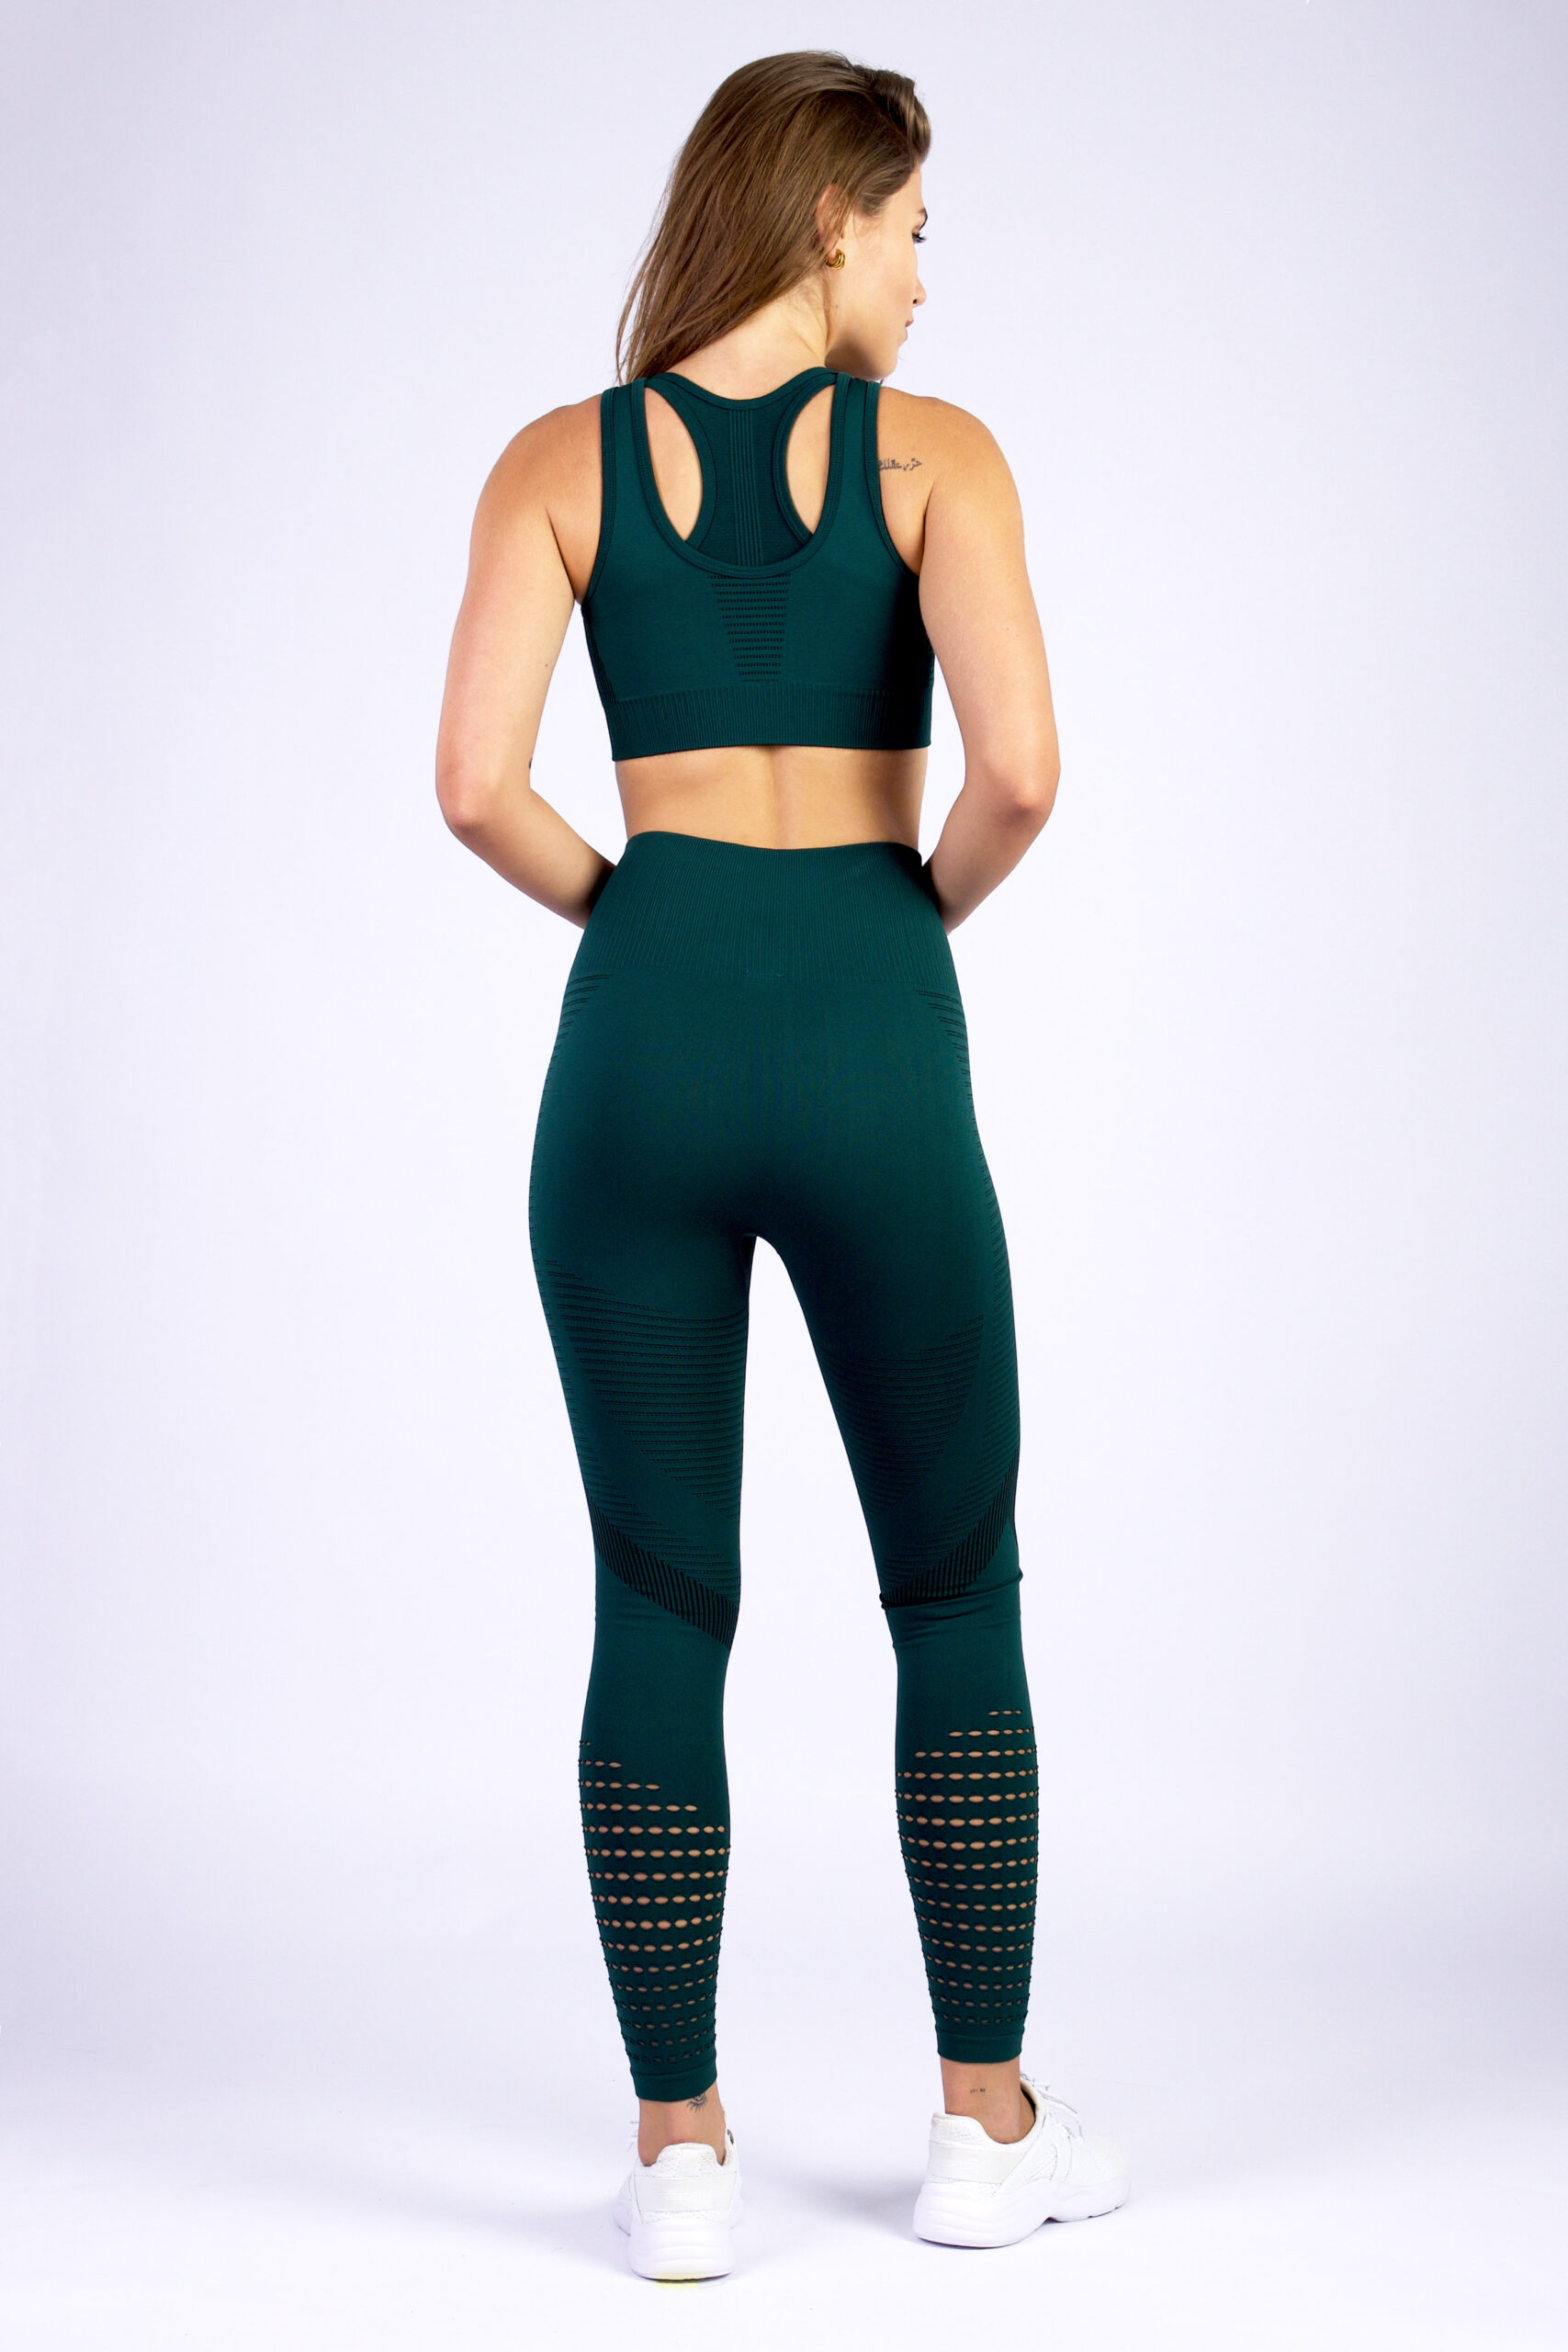 SIA GREEN SET (SPORTS BRA) - TIYE the coolest sportswear & gym apparel